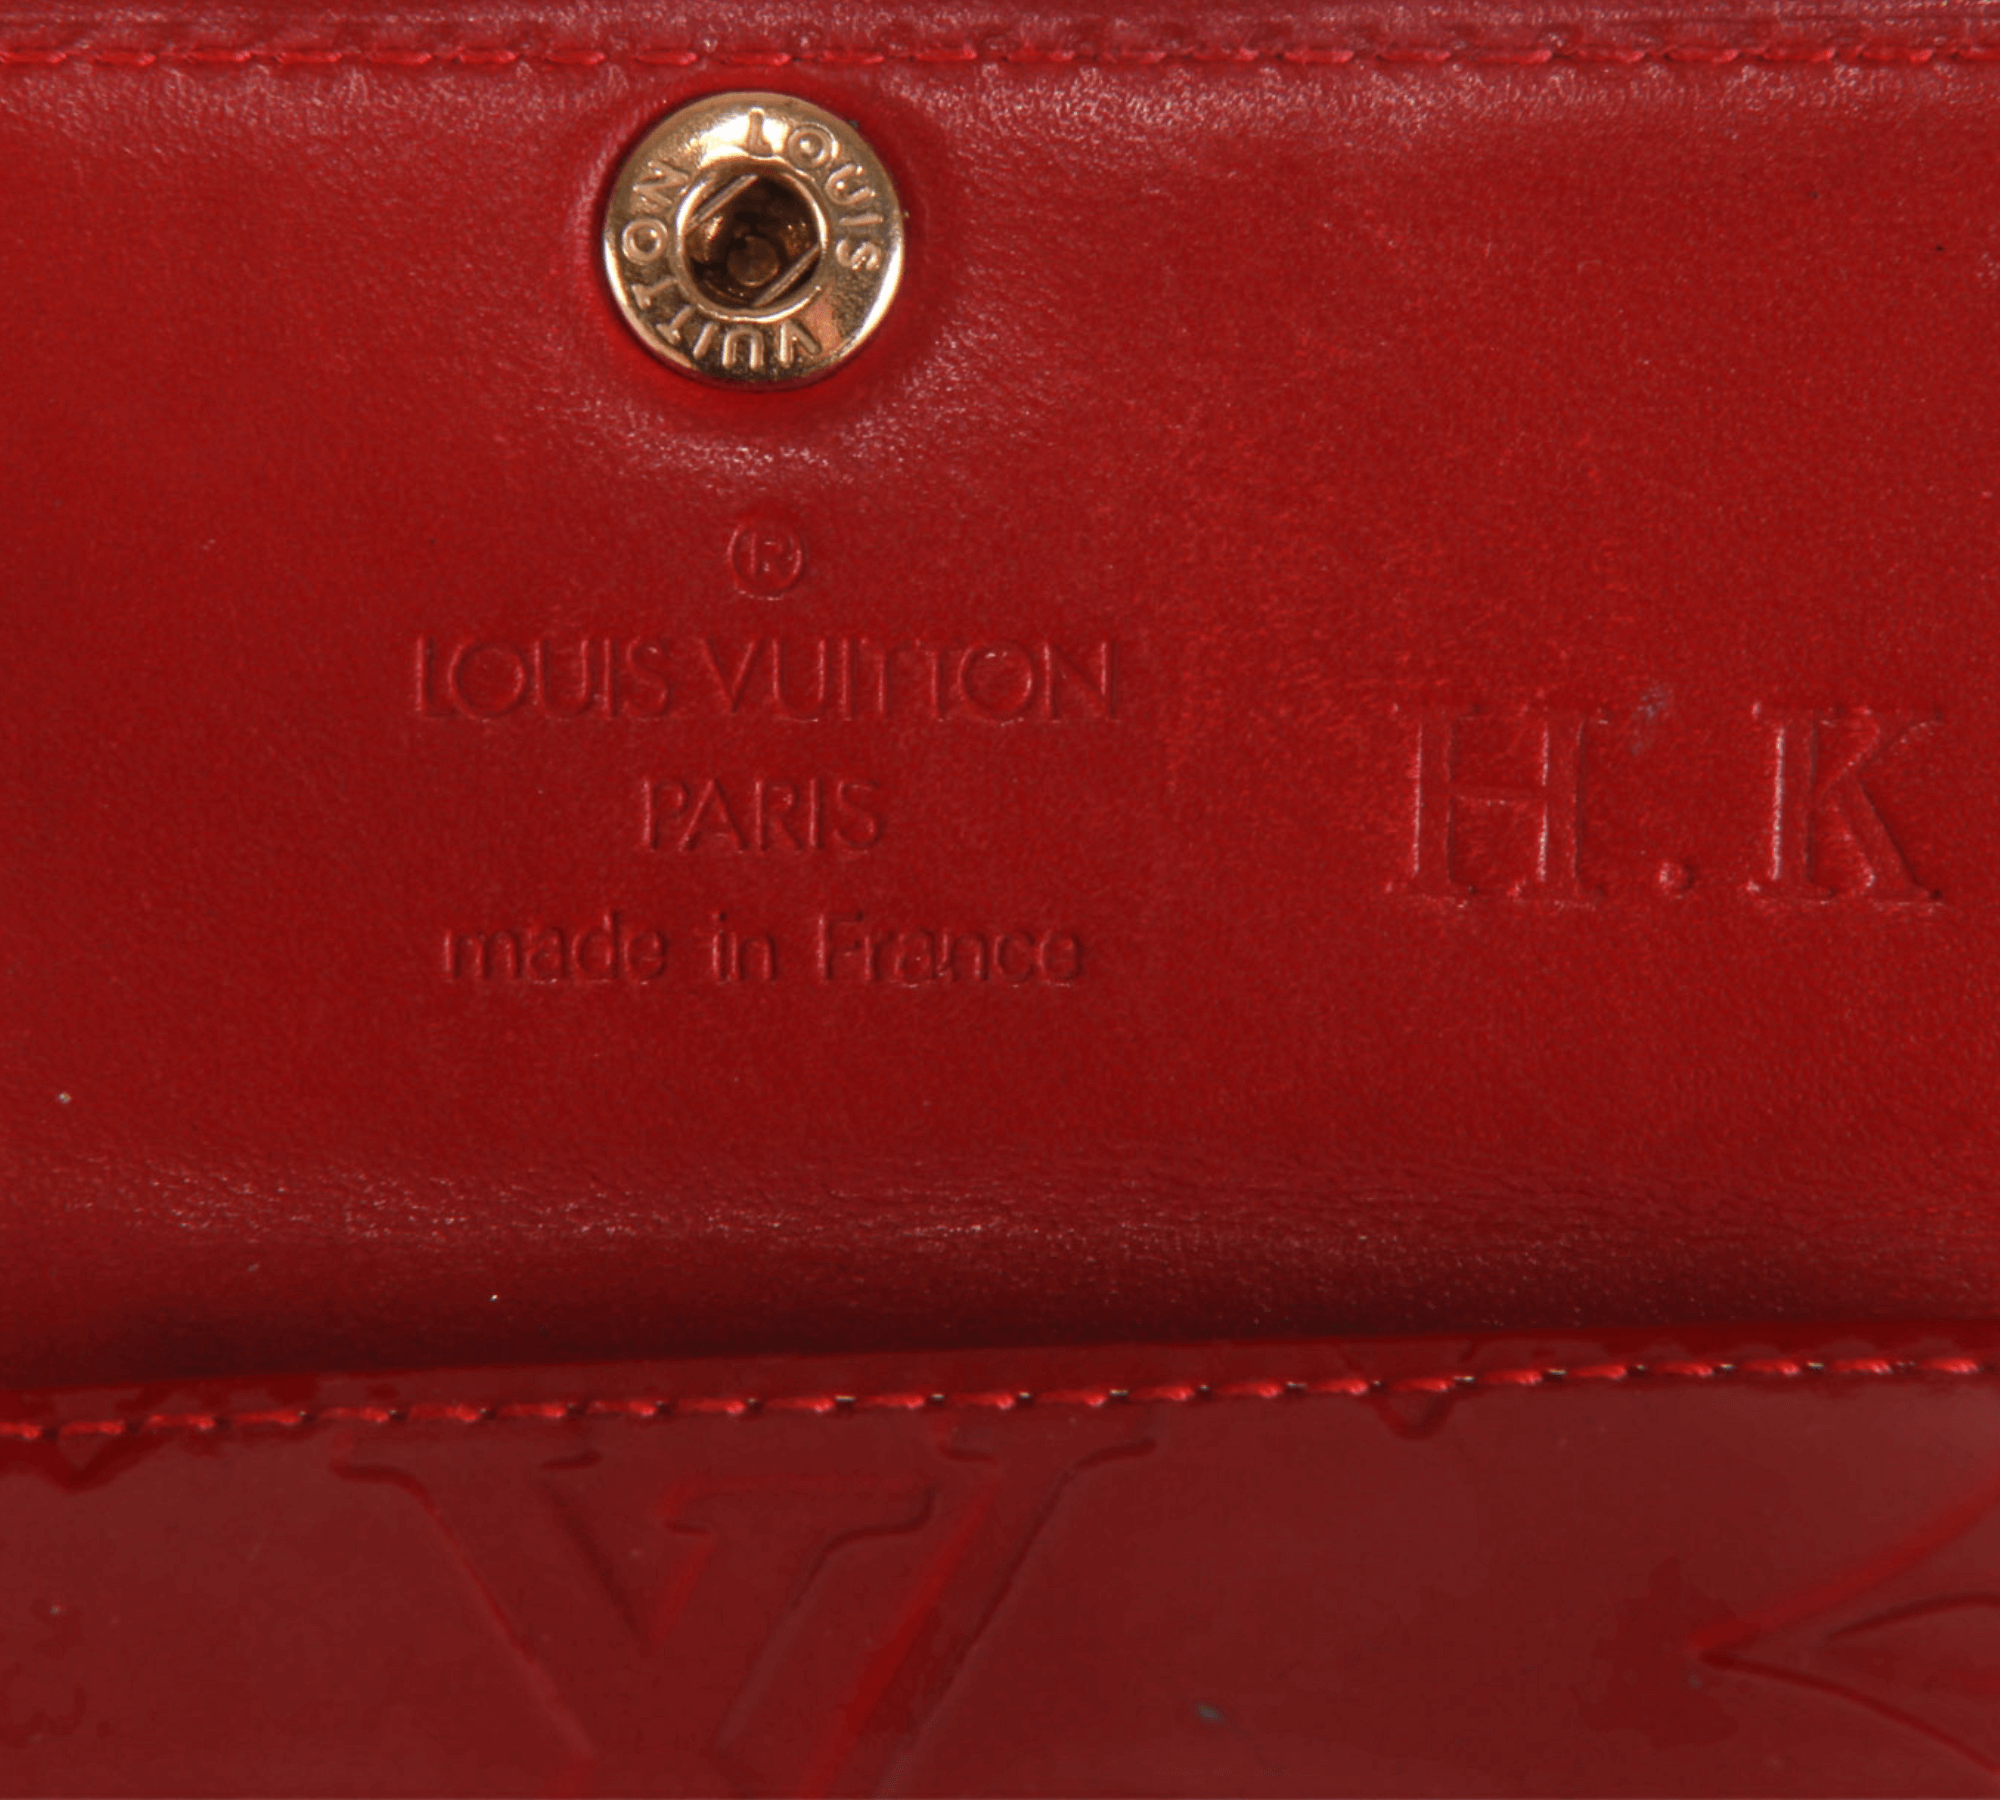 Authentic Louis Vuitton red Monogram Vernis Ludlow Coin Purse